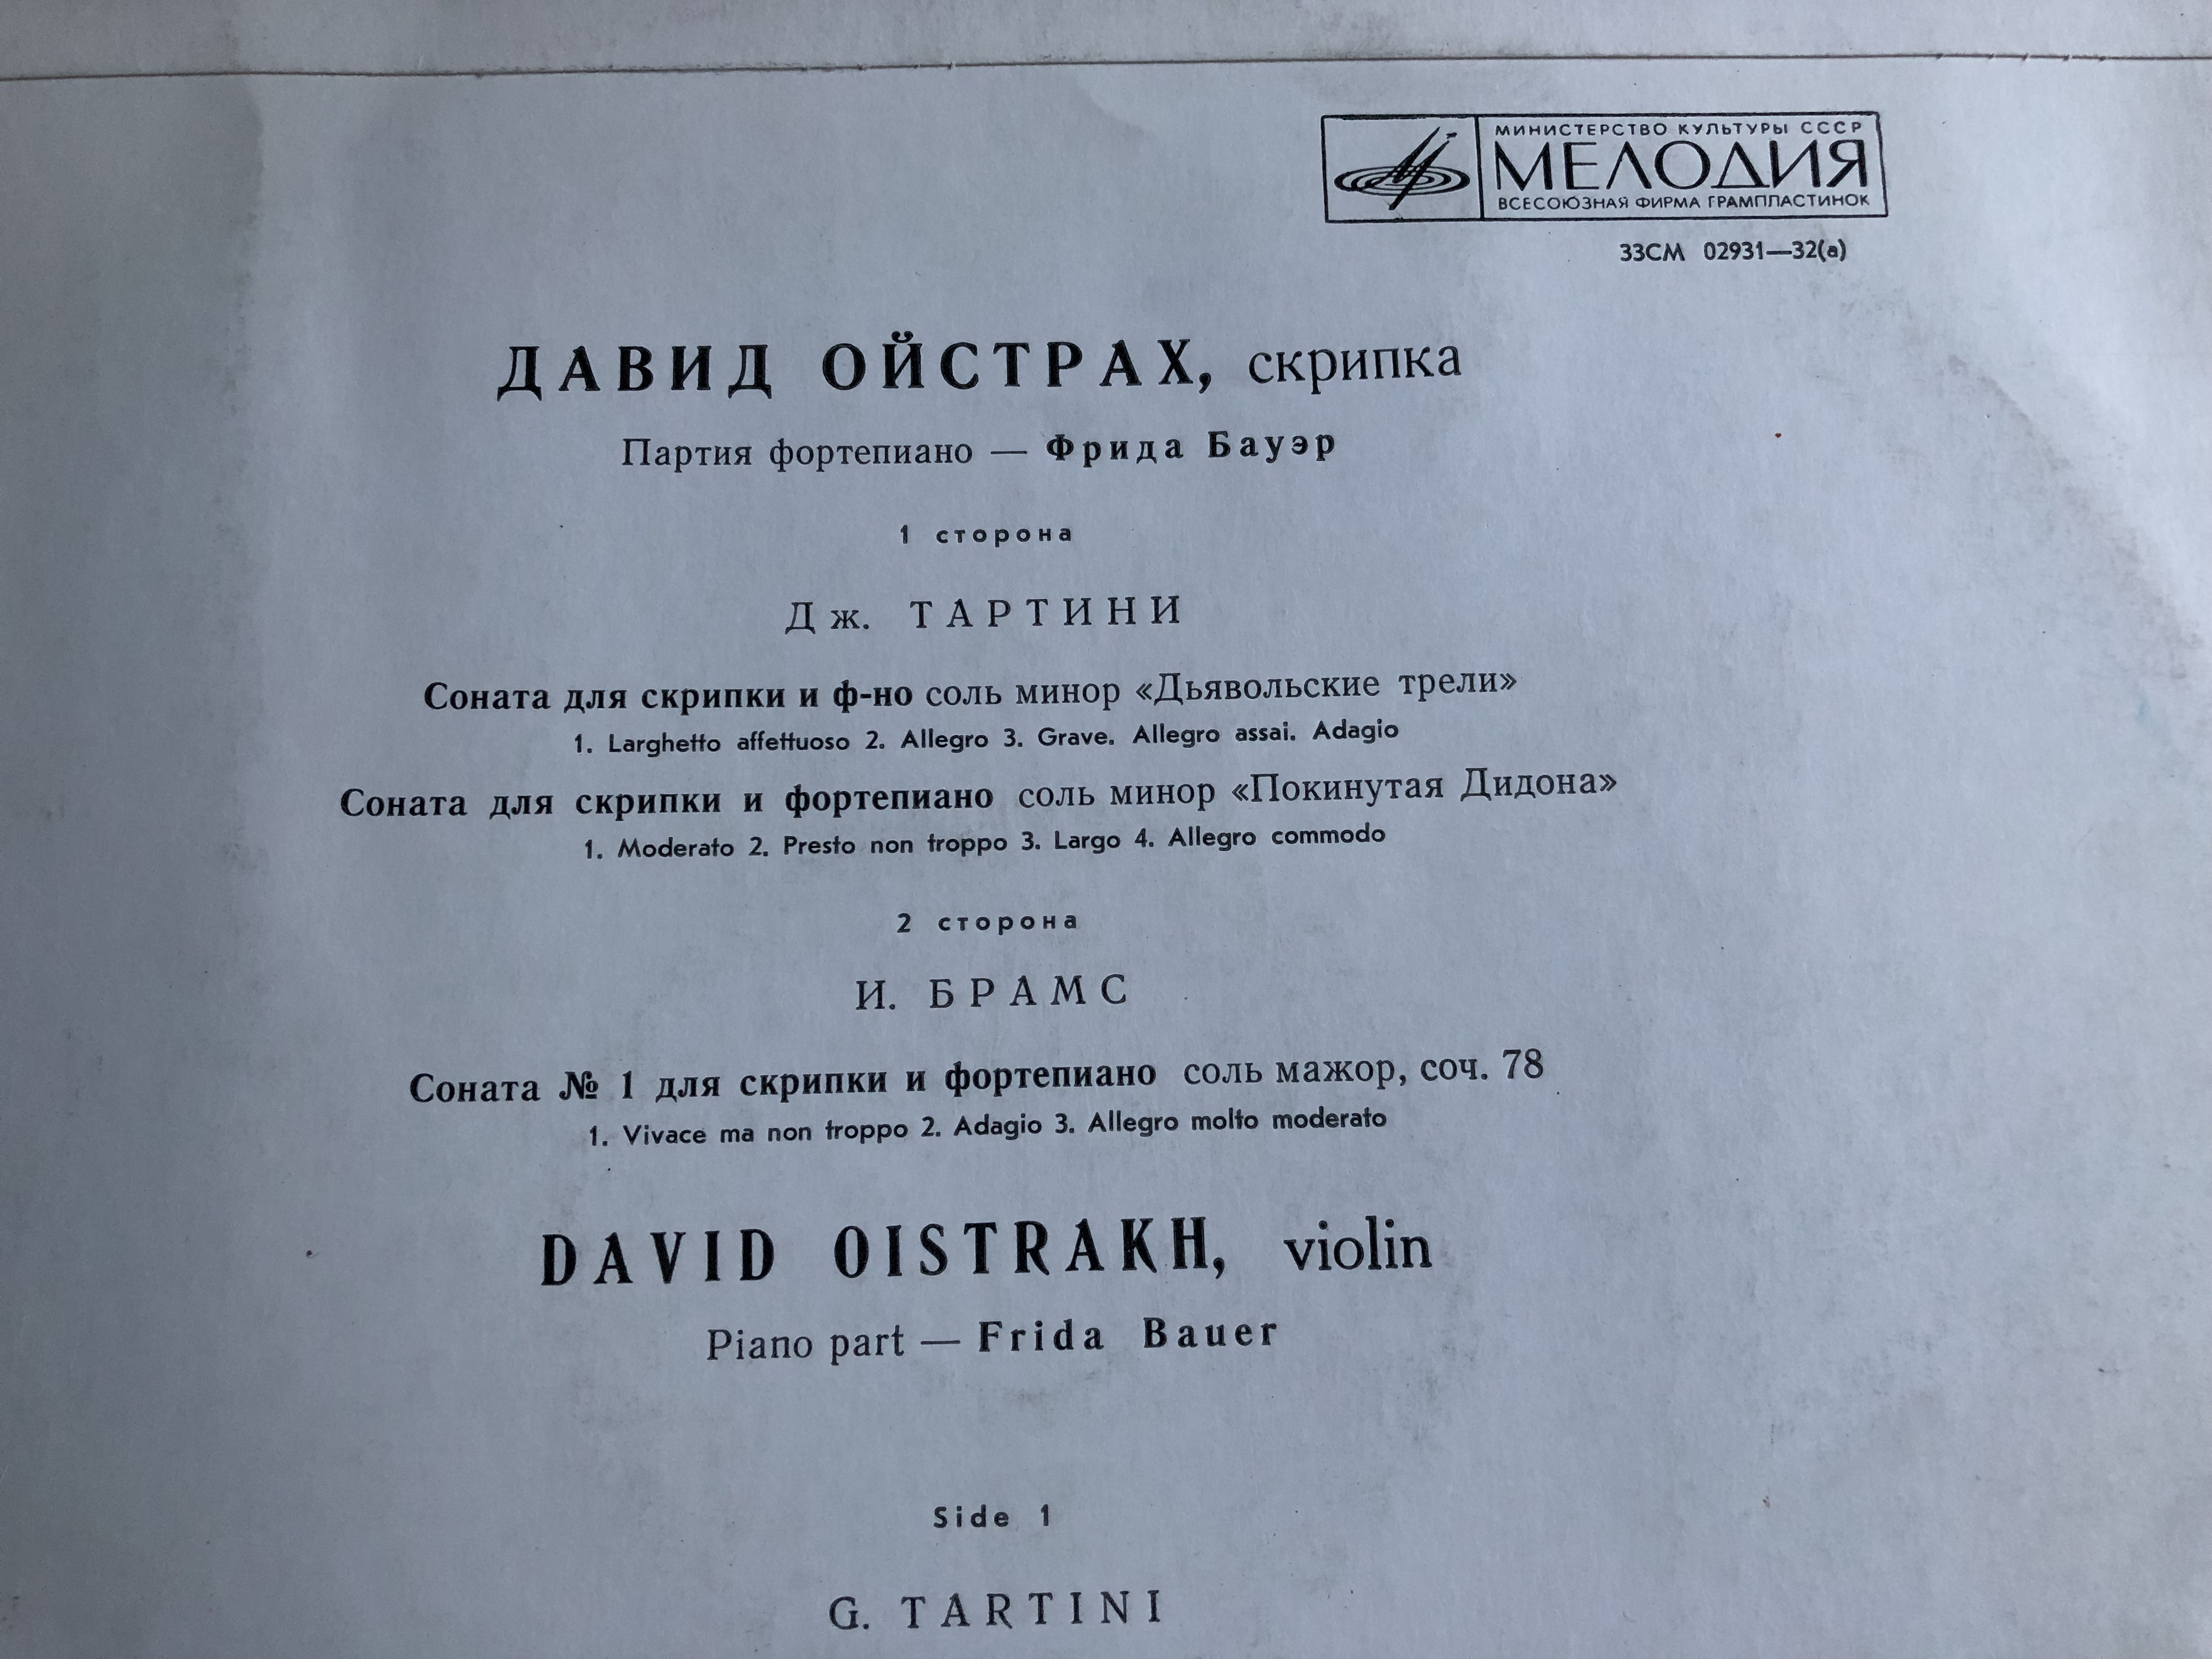 david-oistrakh-sonatas-by-g.-tartini-and-j.-brahms-frieda-bauer-sonatas-for-violin-and-piano-lp-33cm-02931-32-a-3-.jpg